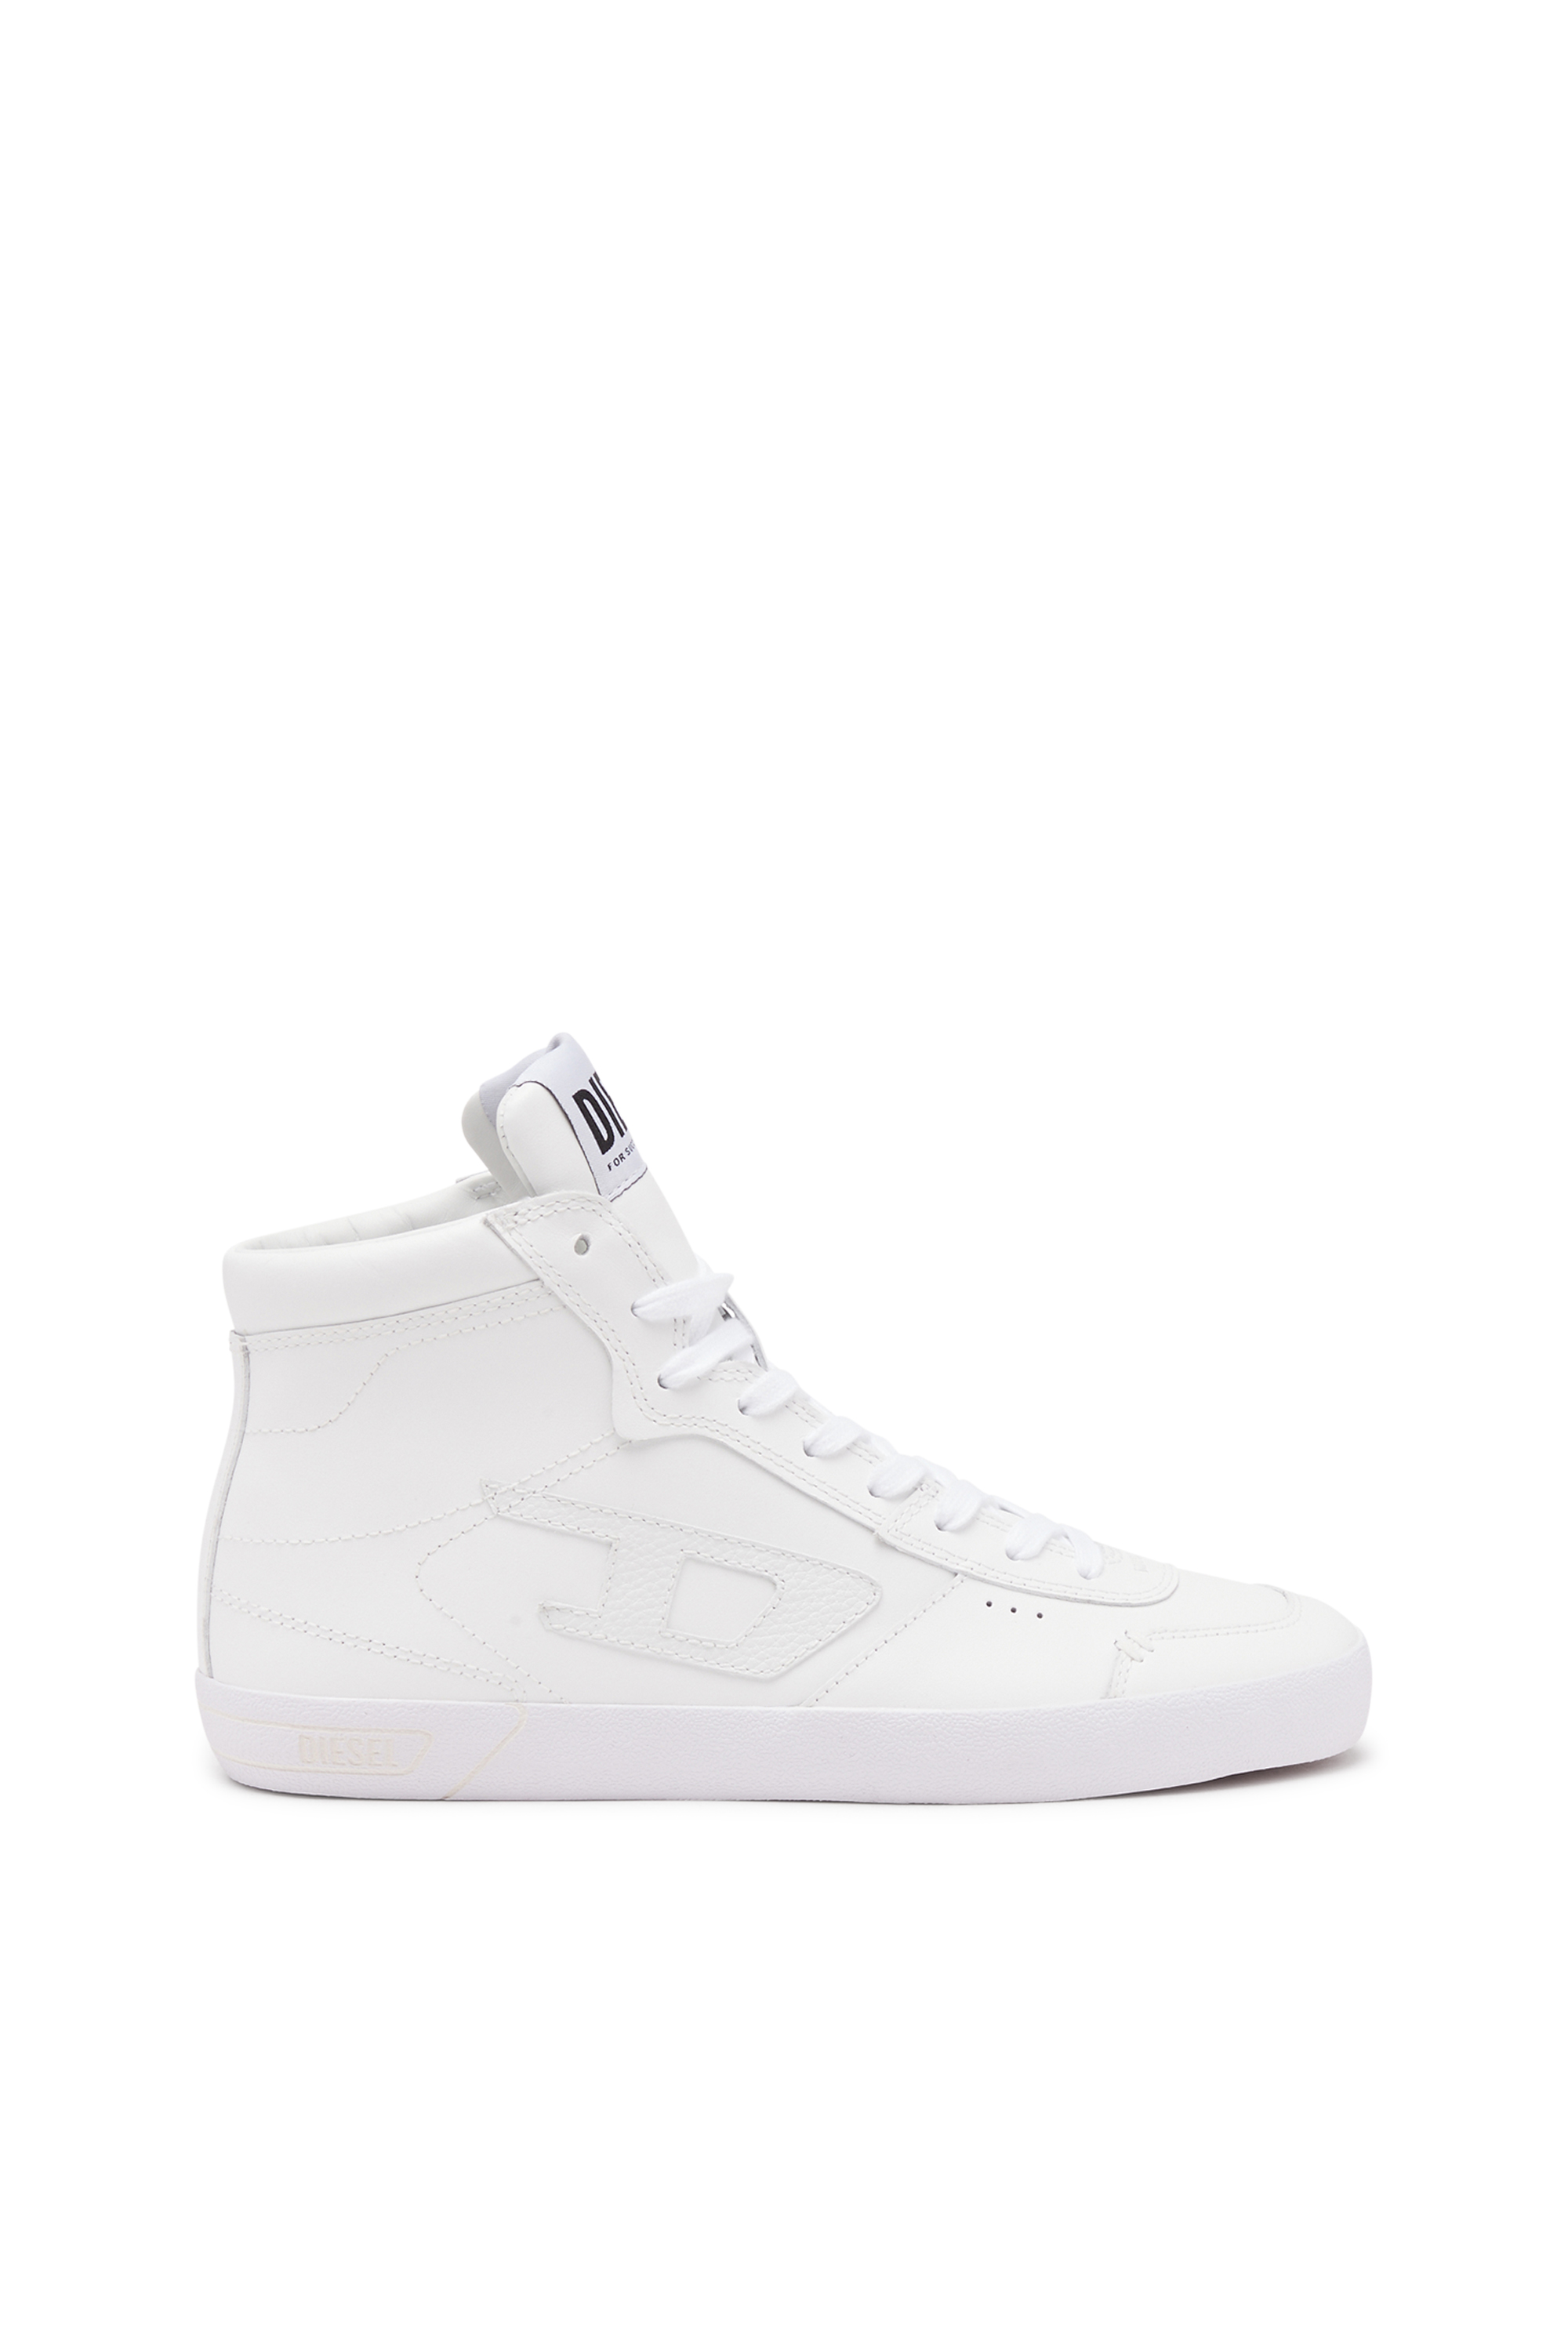 Diesel - S-Leroji Mid W - High-top sneakers in smooth leather - Sneakers - Woman - White